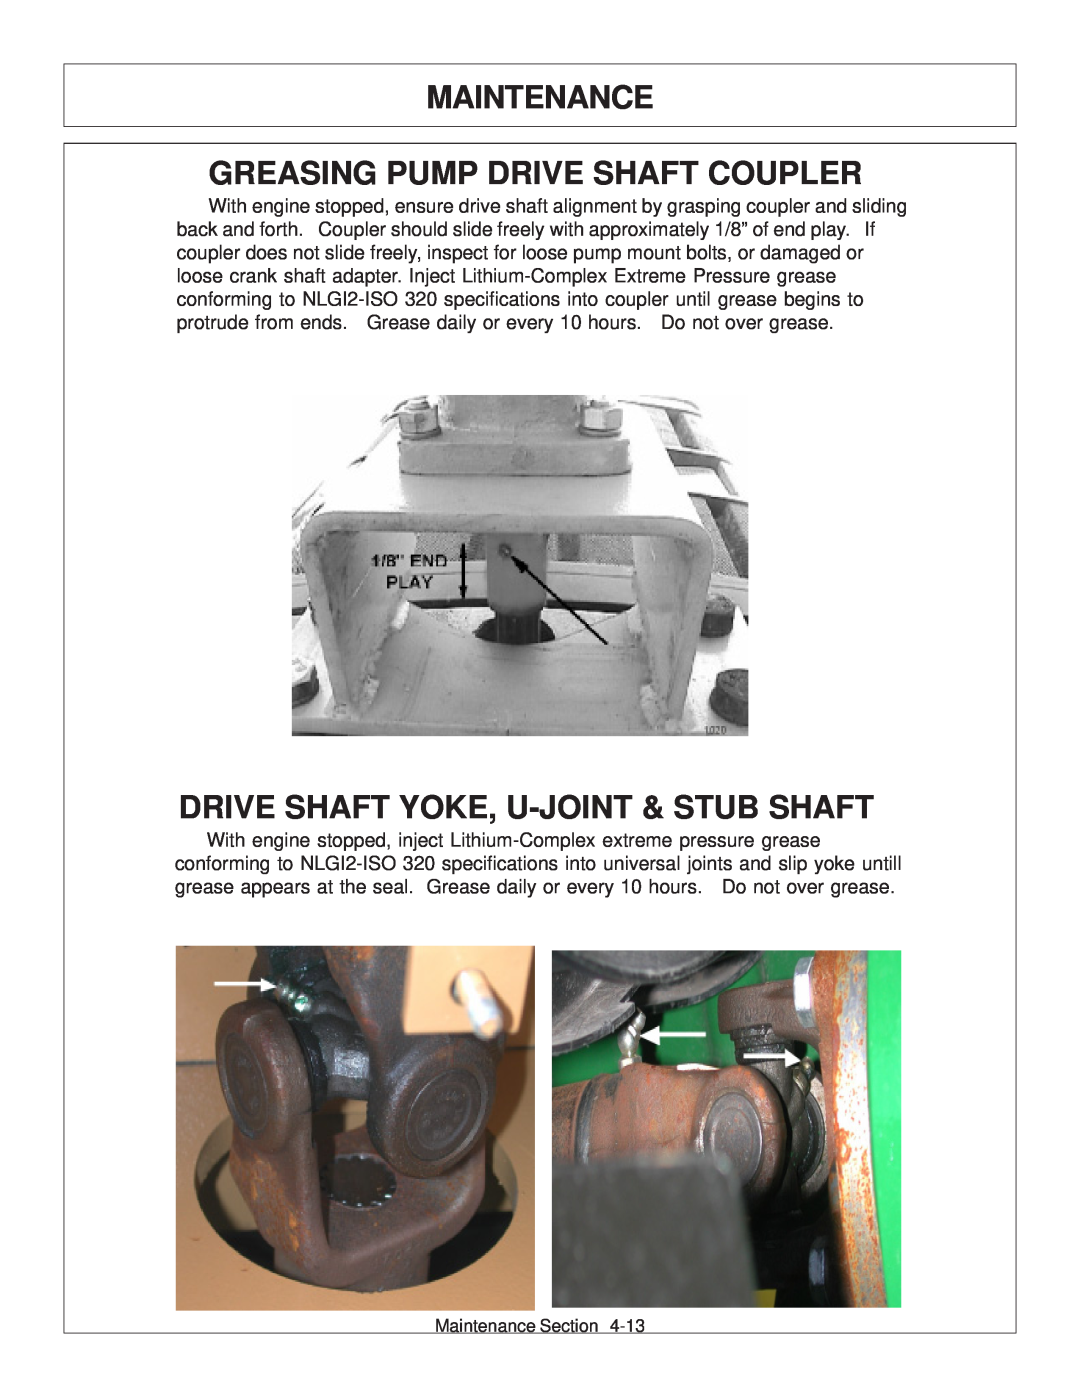 Tiger Products Co., Ltd JD 72-7520 Maintenance Greasing Pump Drive Shaft Coupler, Drive Shaft Yoke, U-Joint & Stub Shaft 